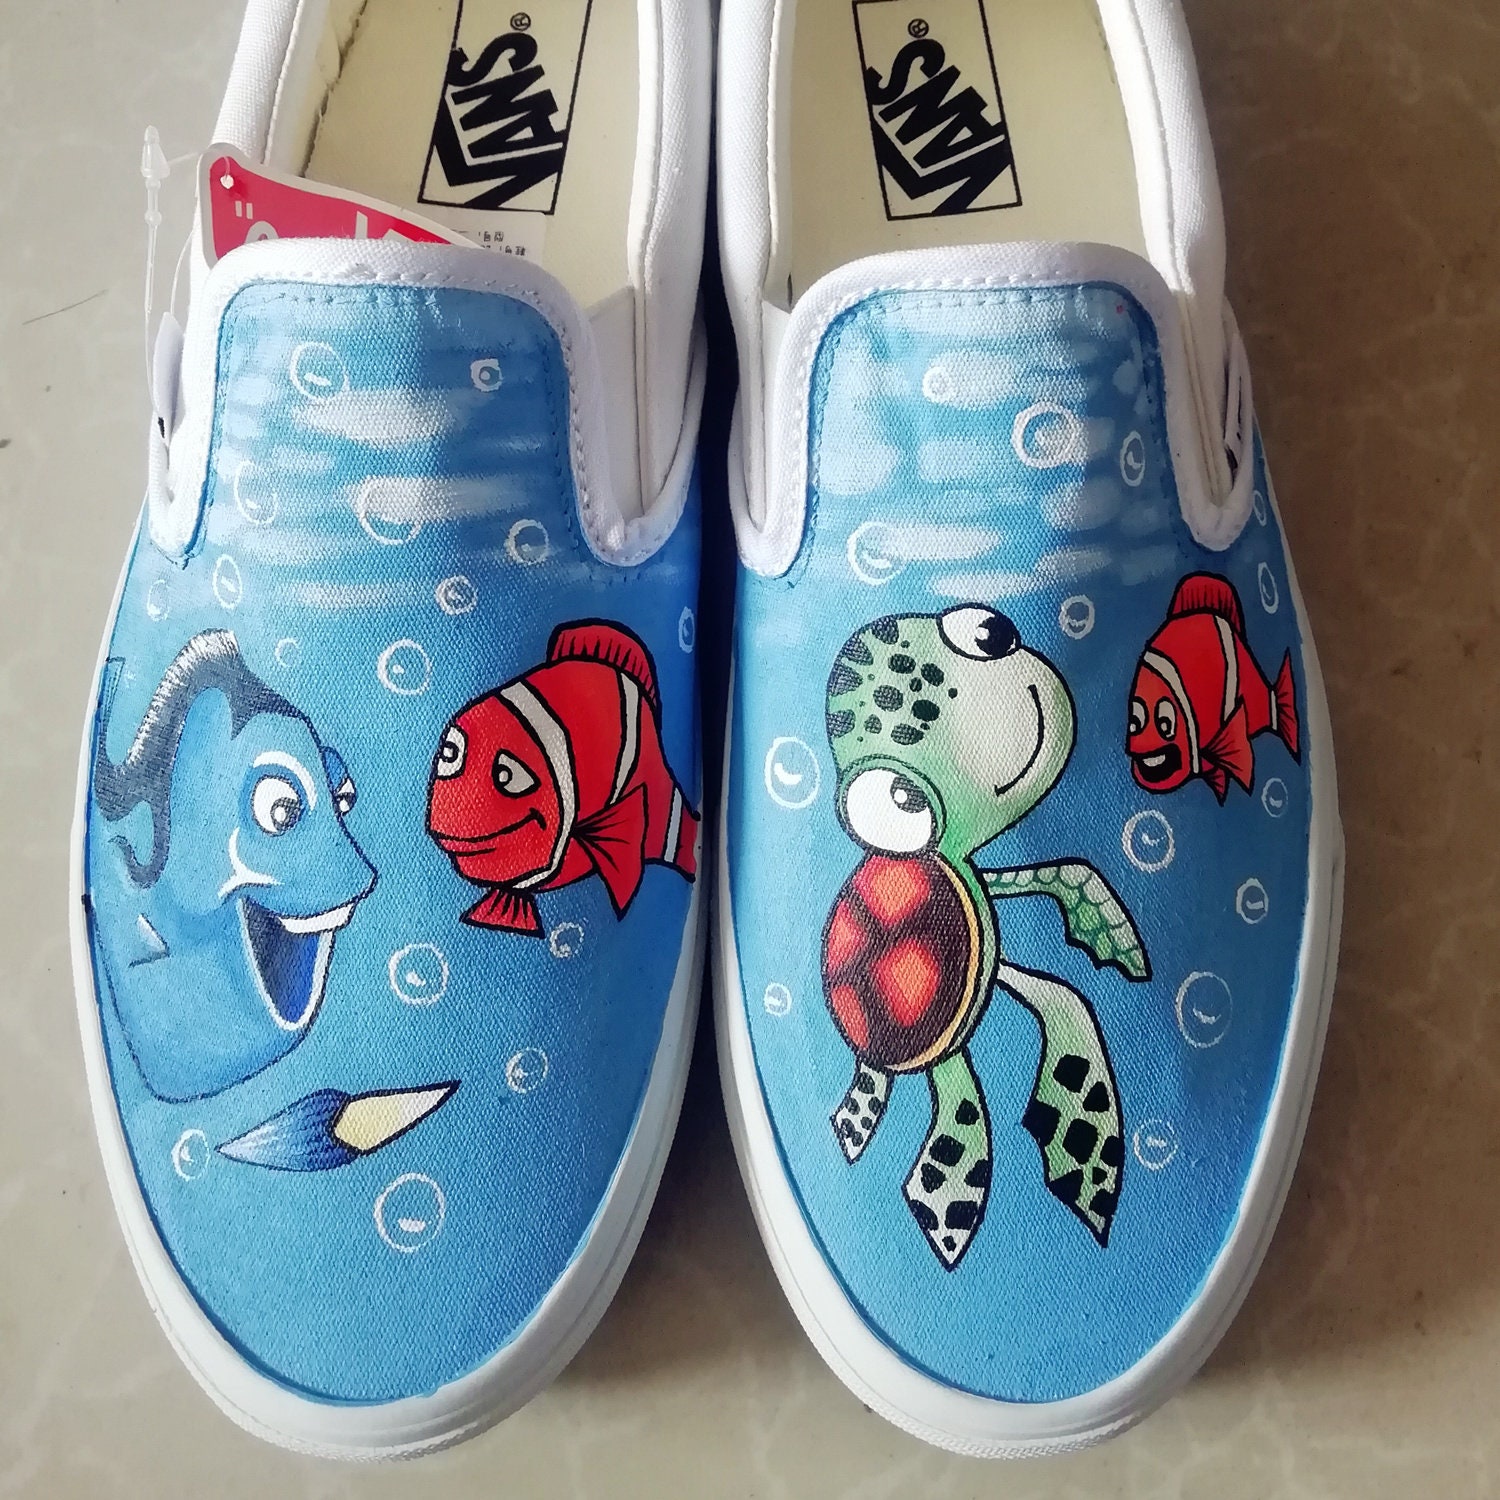 Disney Finding Nemo Painted Shoes Vans 